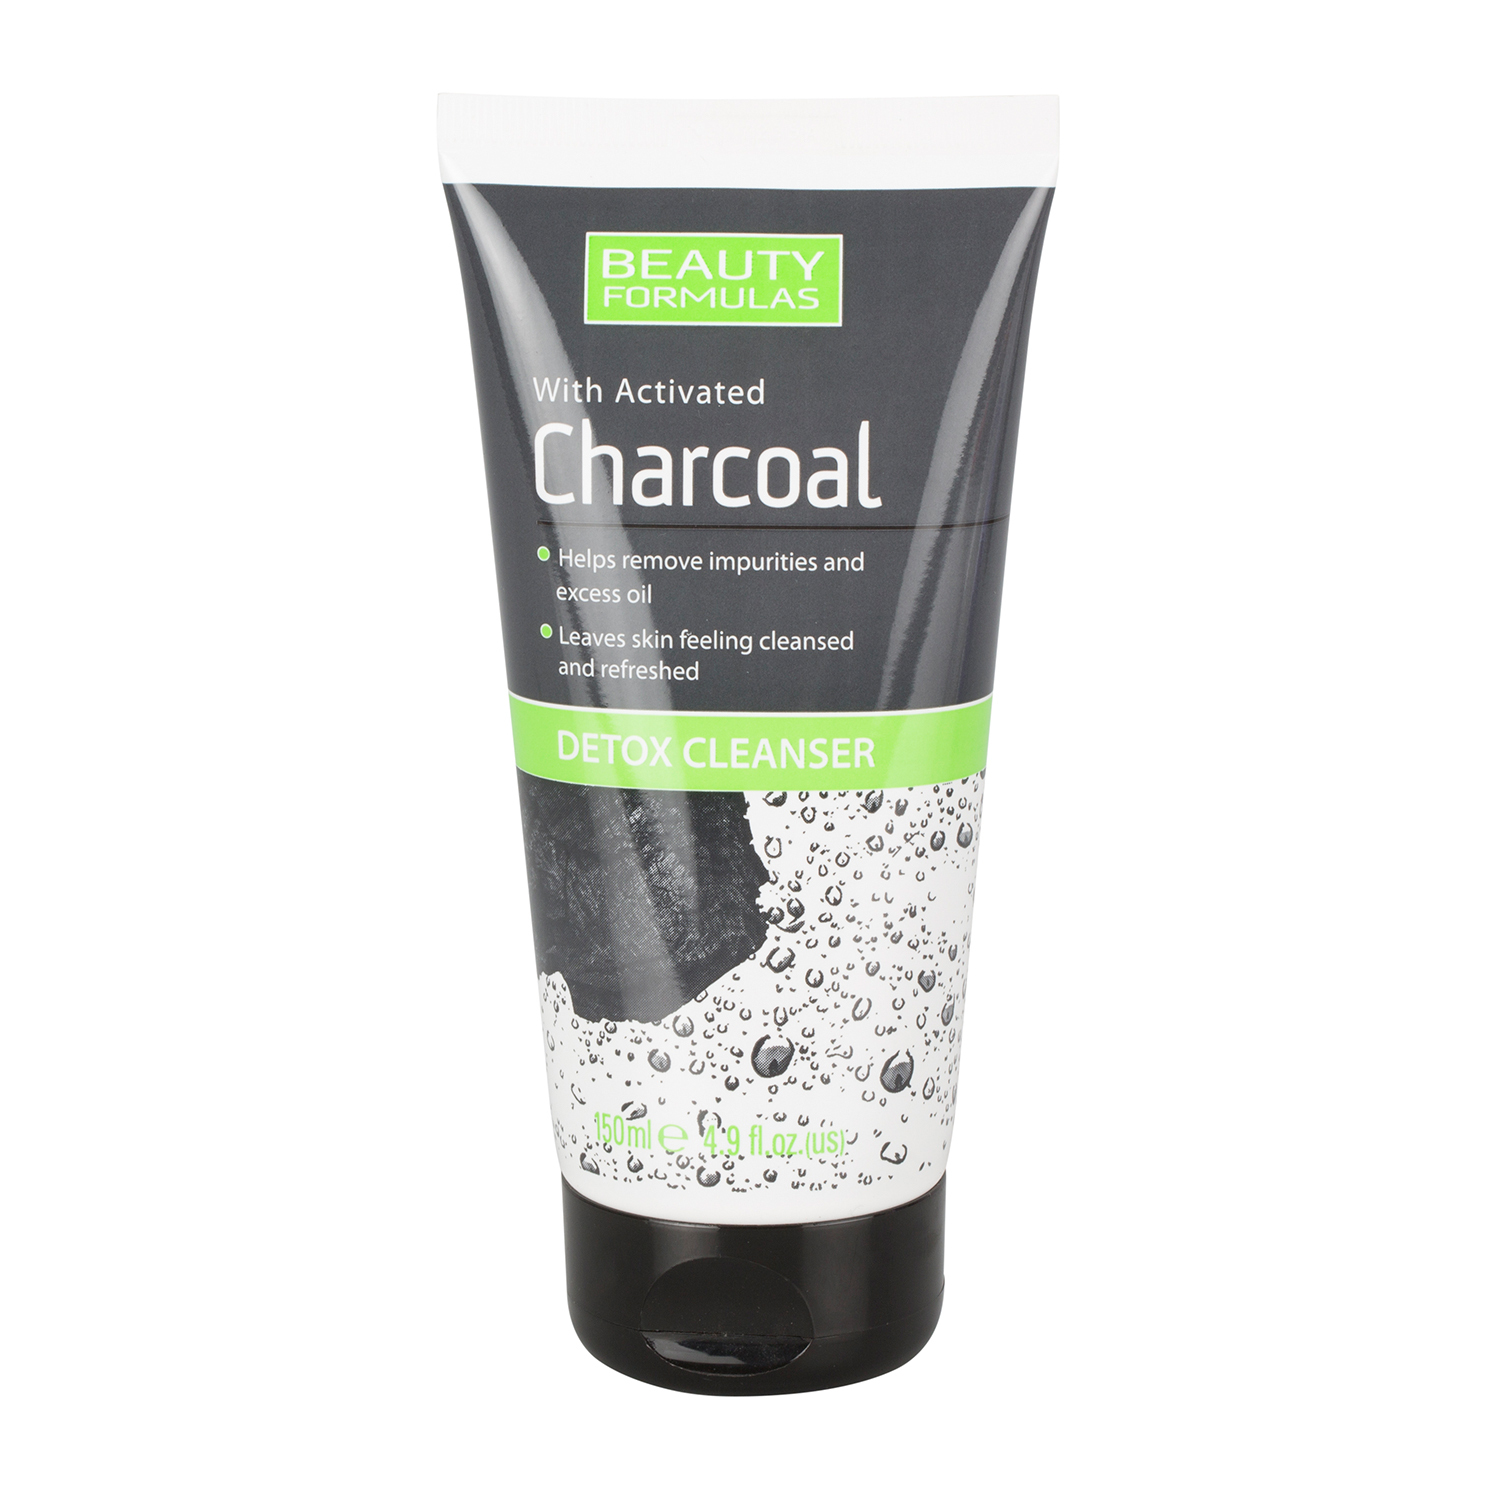 Beauty Formulas Charcoal Detox Cleanser Image